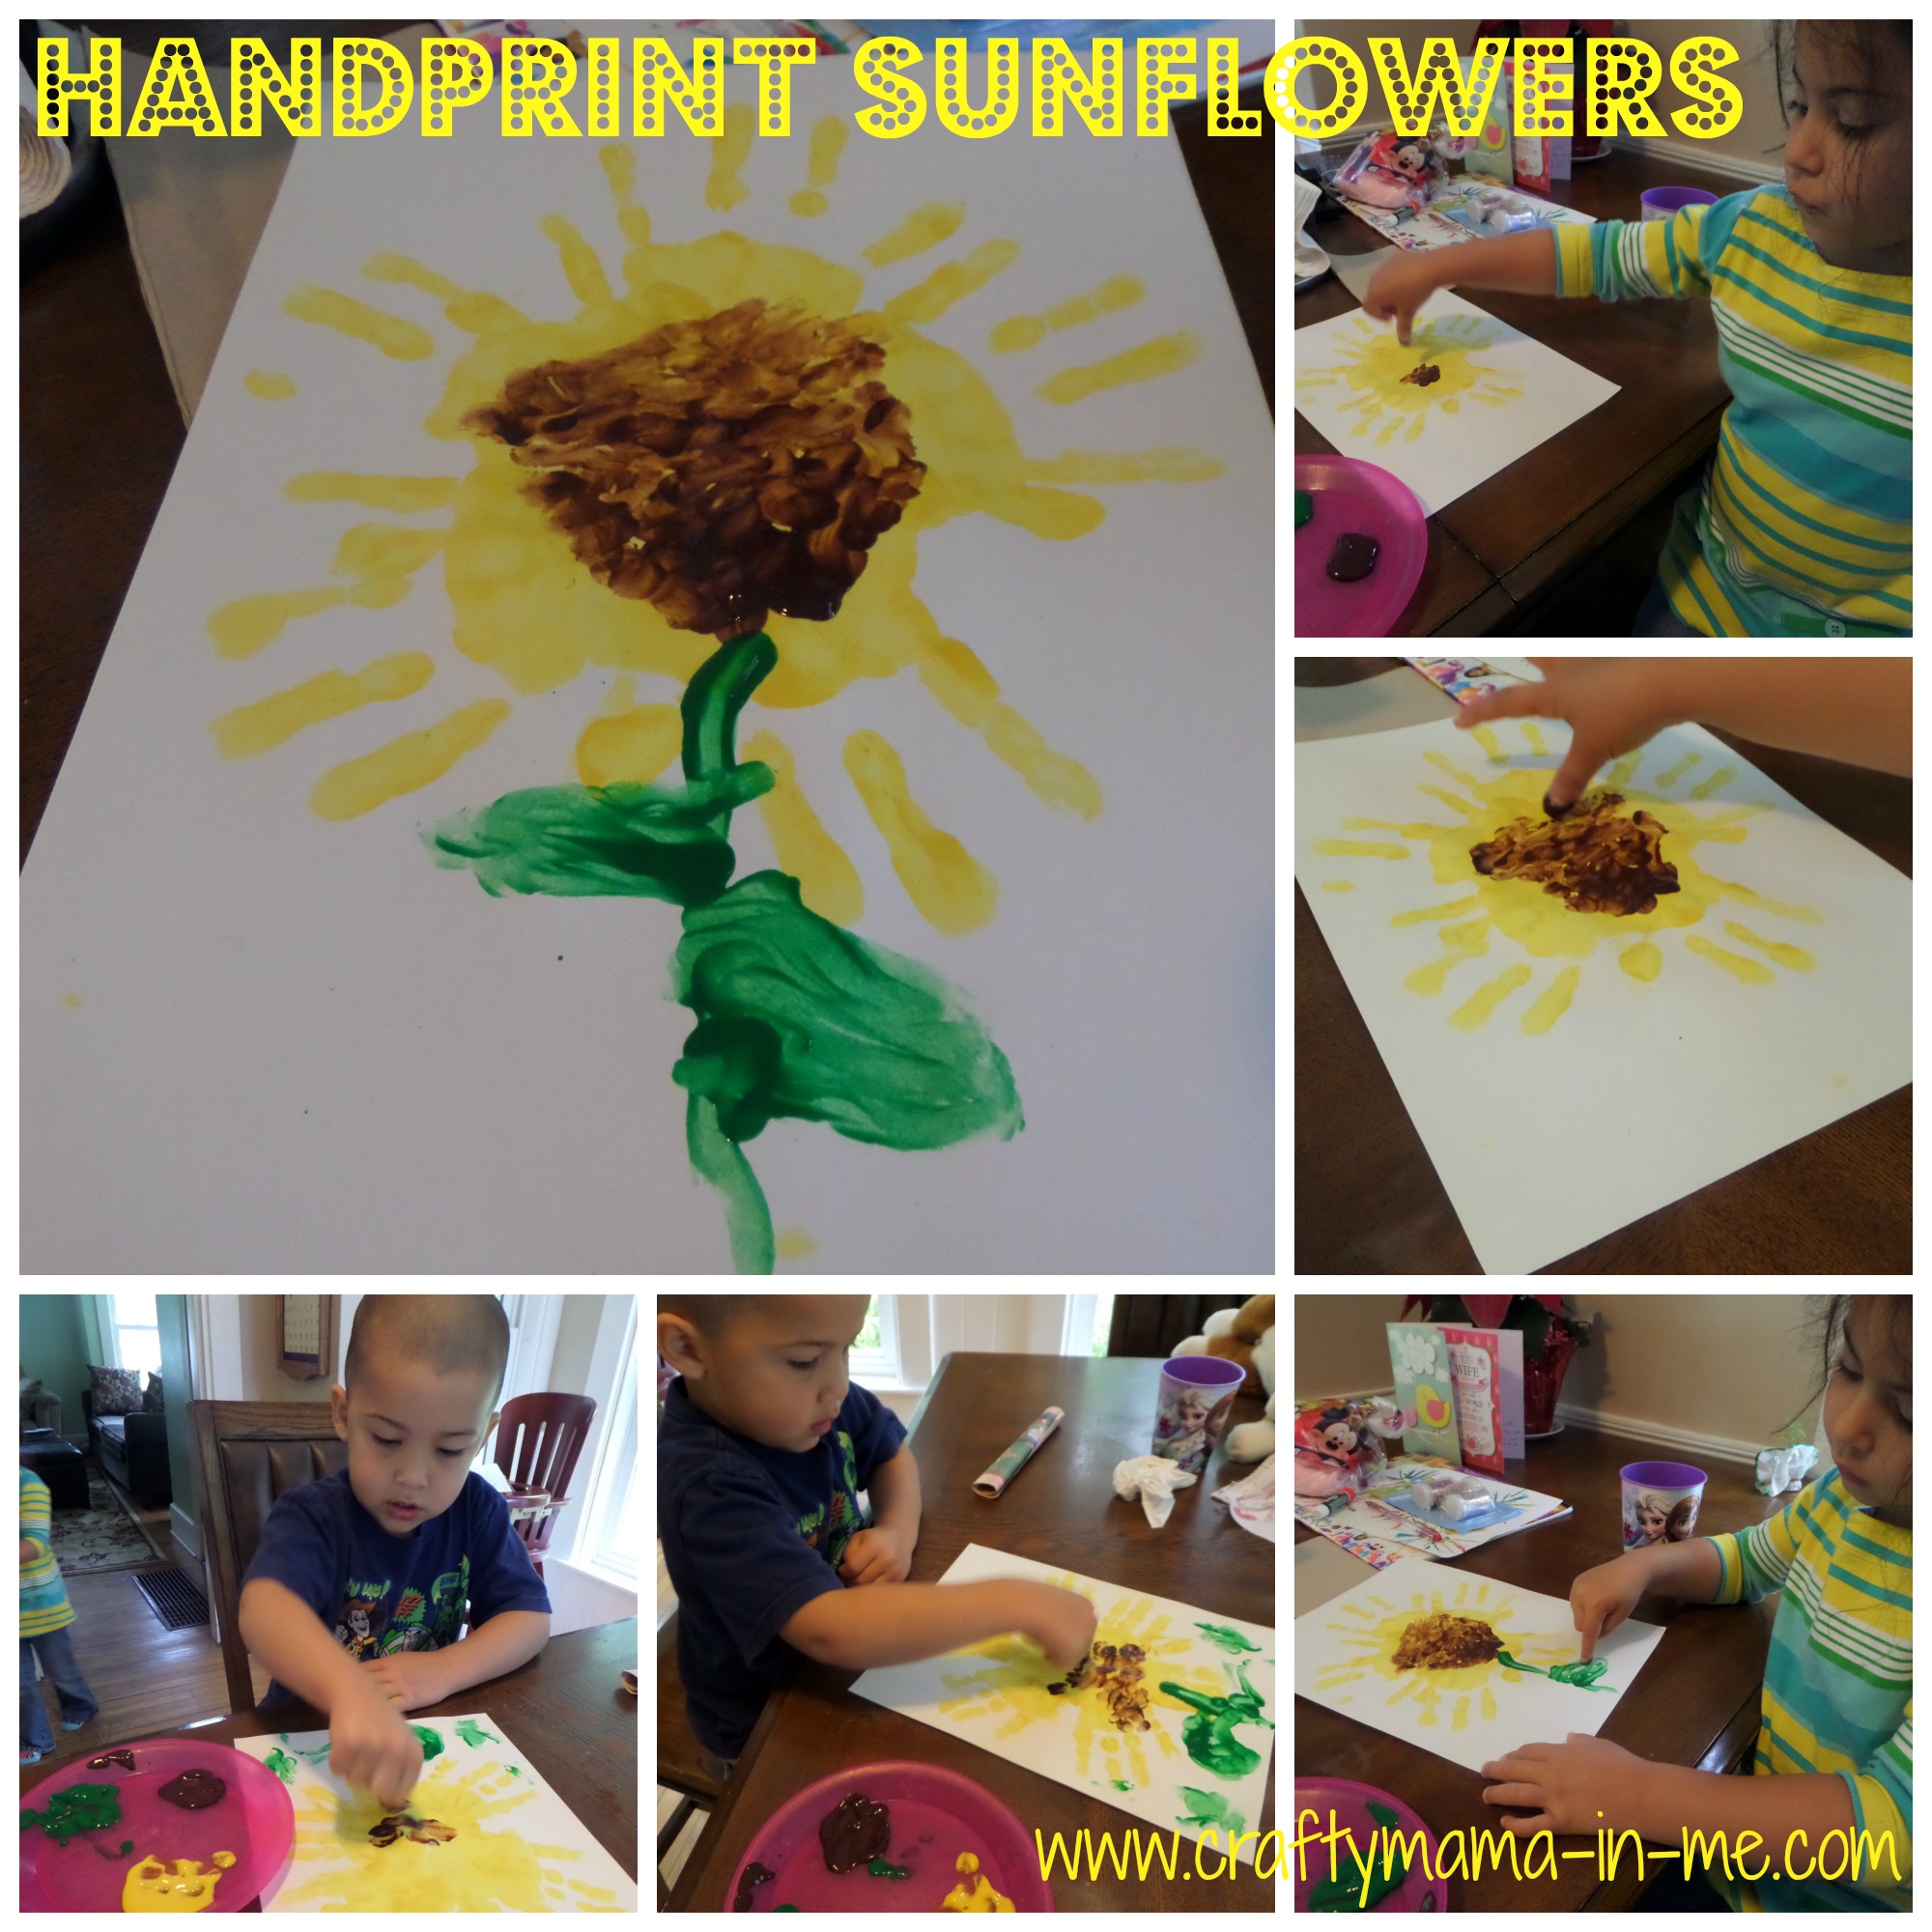 Handprint Sunflowers